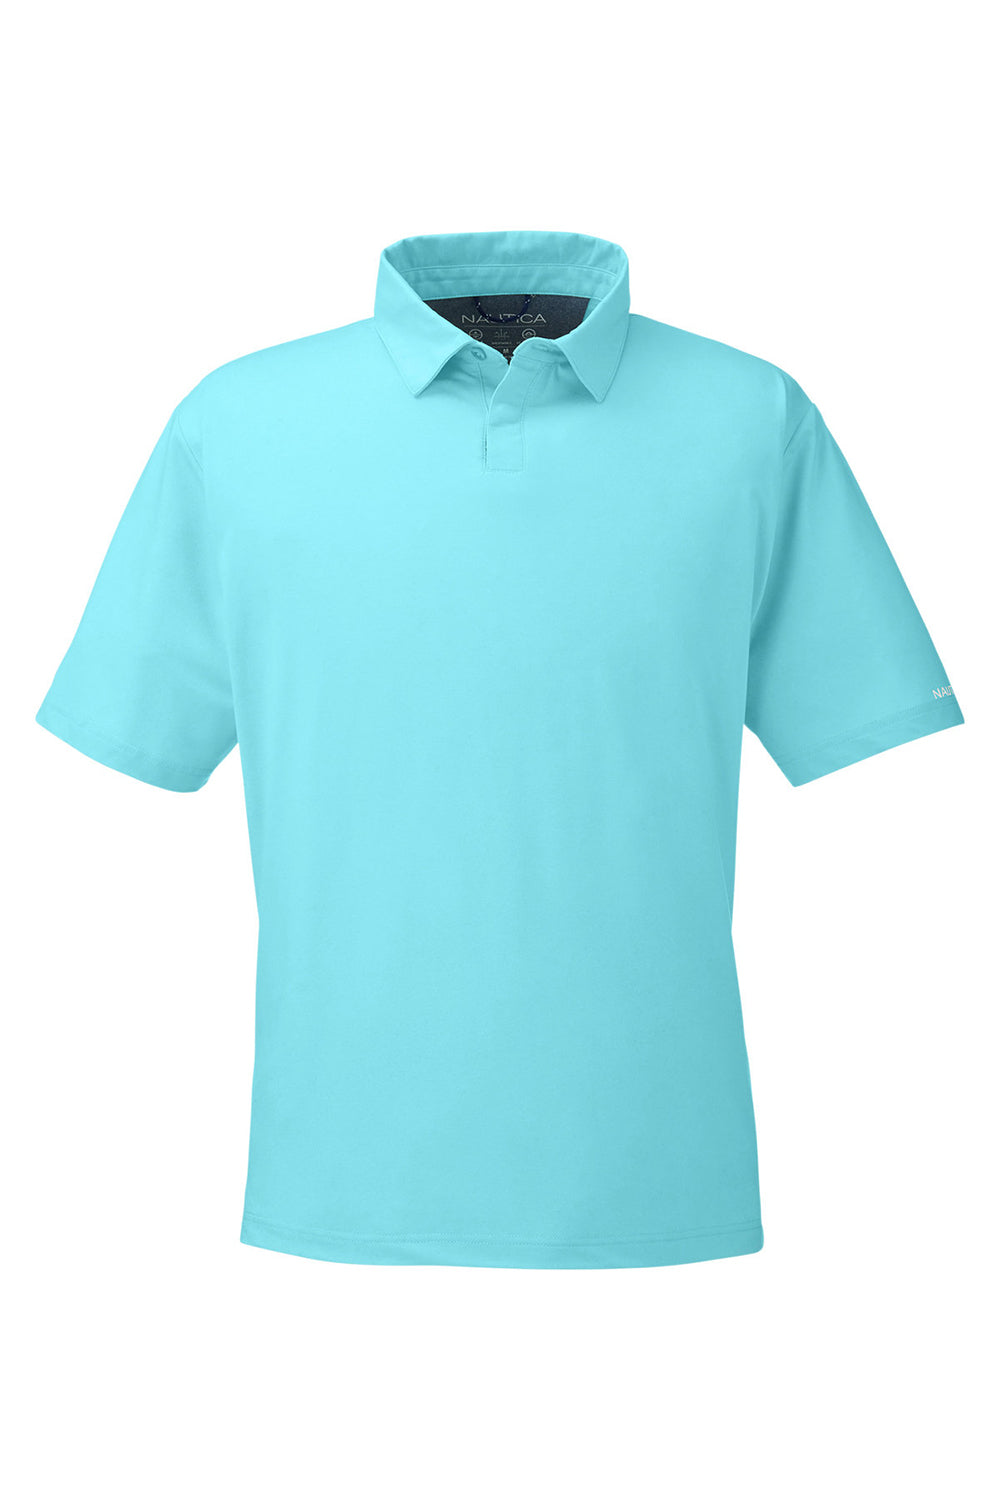 Nautica N17922 Mens Saltwater Short Sleeve Polo Shirt Sea Mist Blue Flat Front